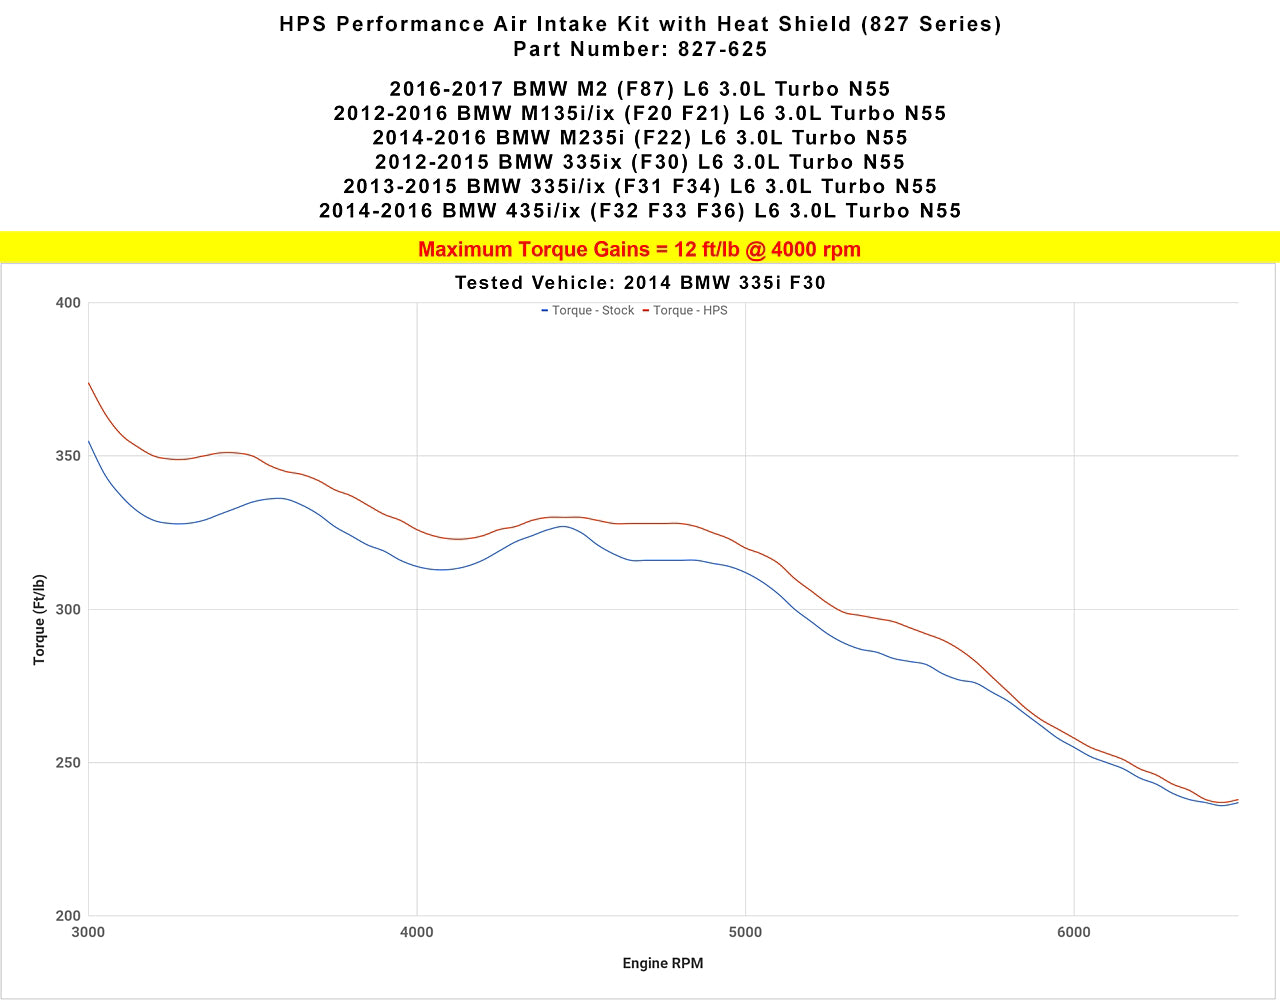 Dyno proven gains 12 ft/lb HPS Performance Shortram Air Intake Kit 2013-2015 BMW 335i 335ix F31 F34 3.0L Turbo N55 827-625BL